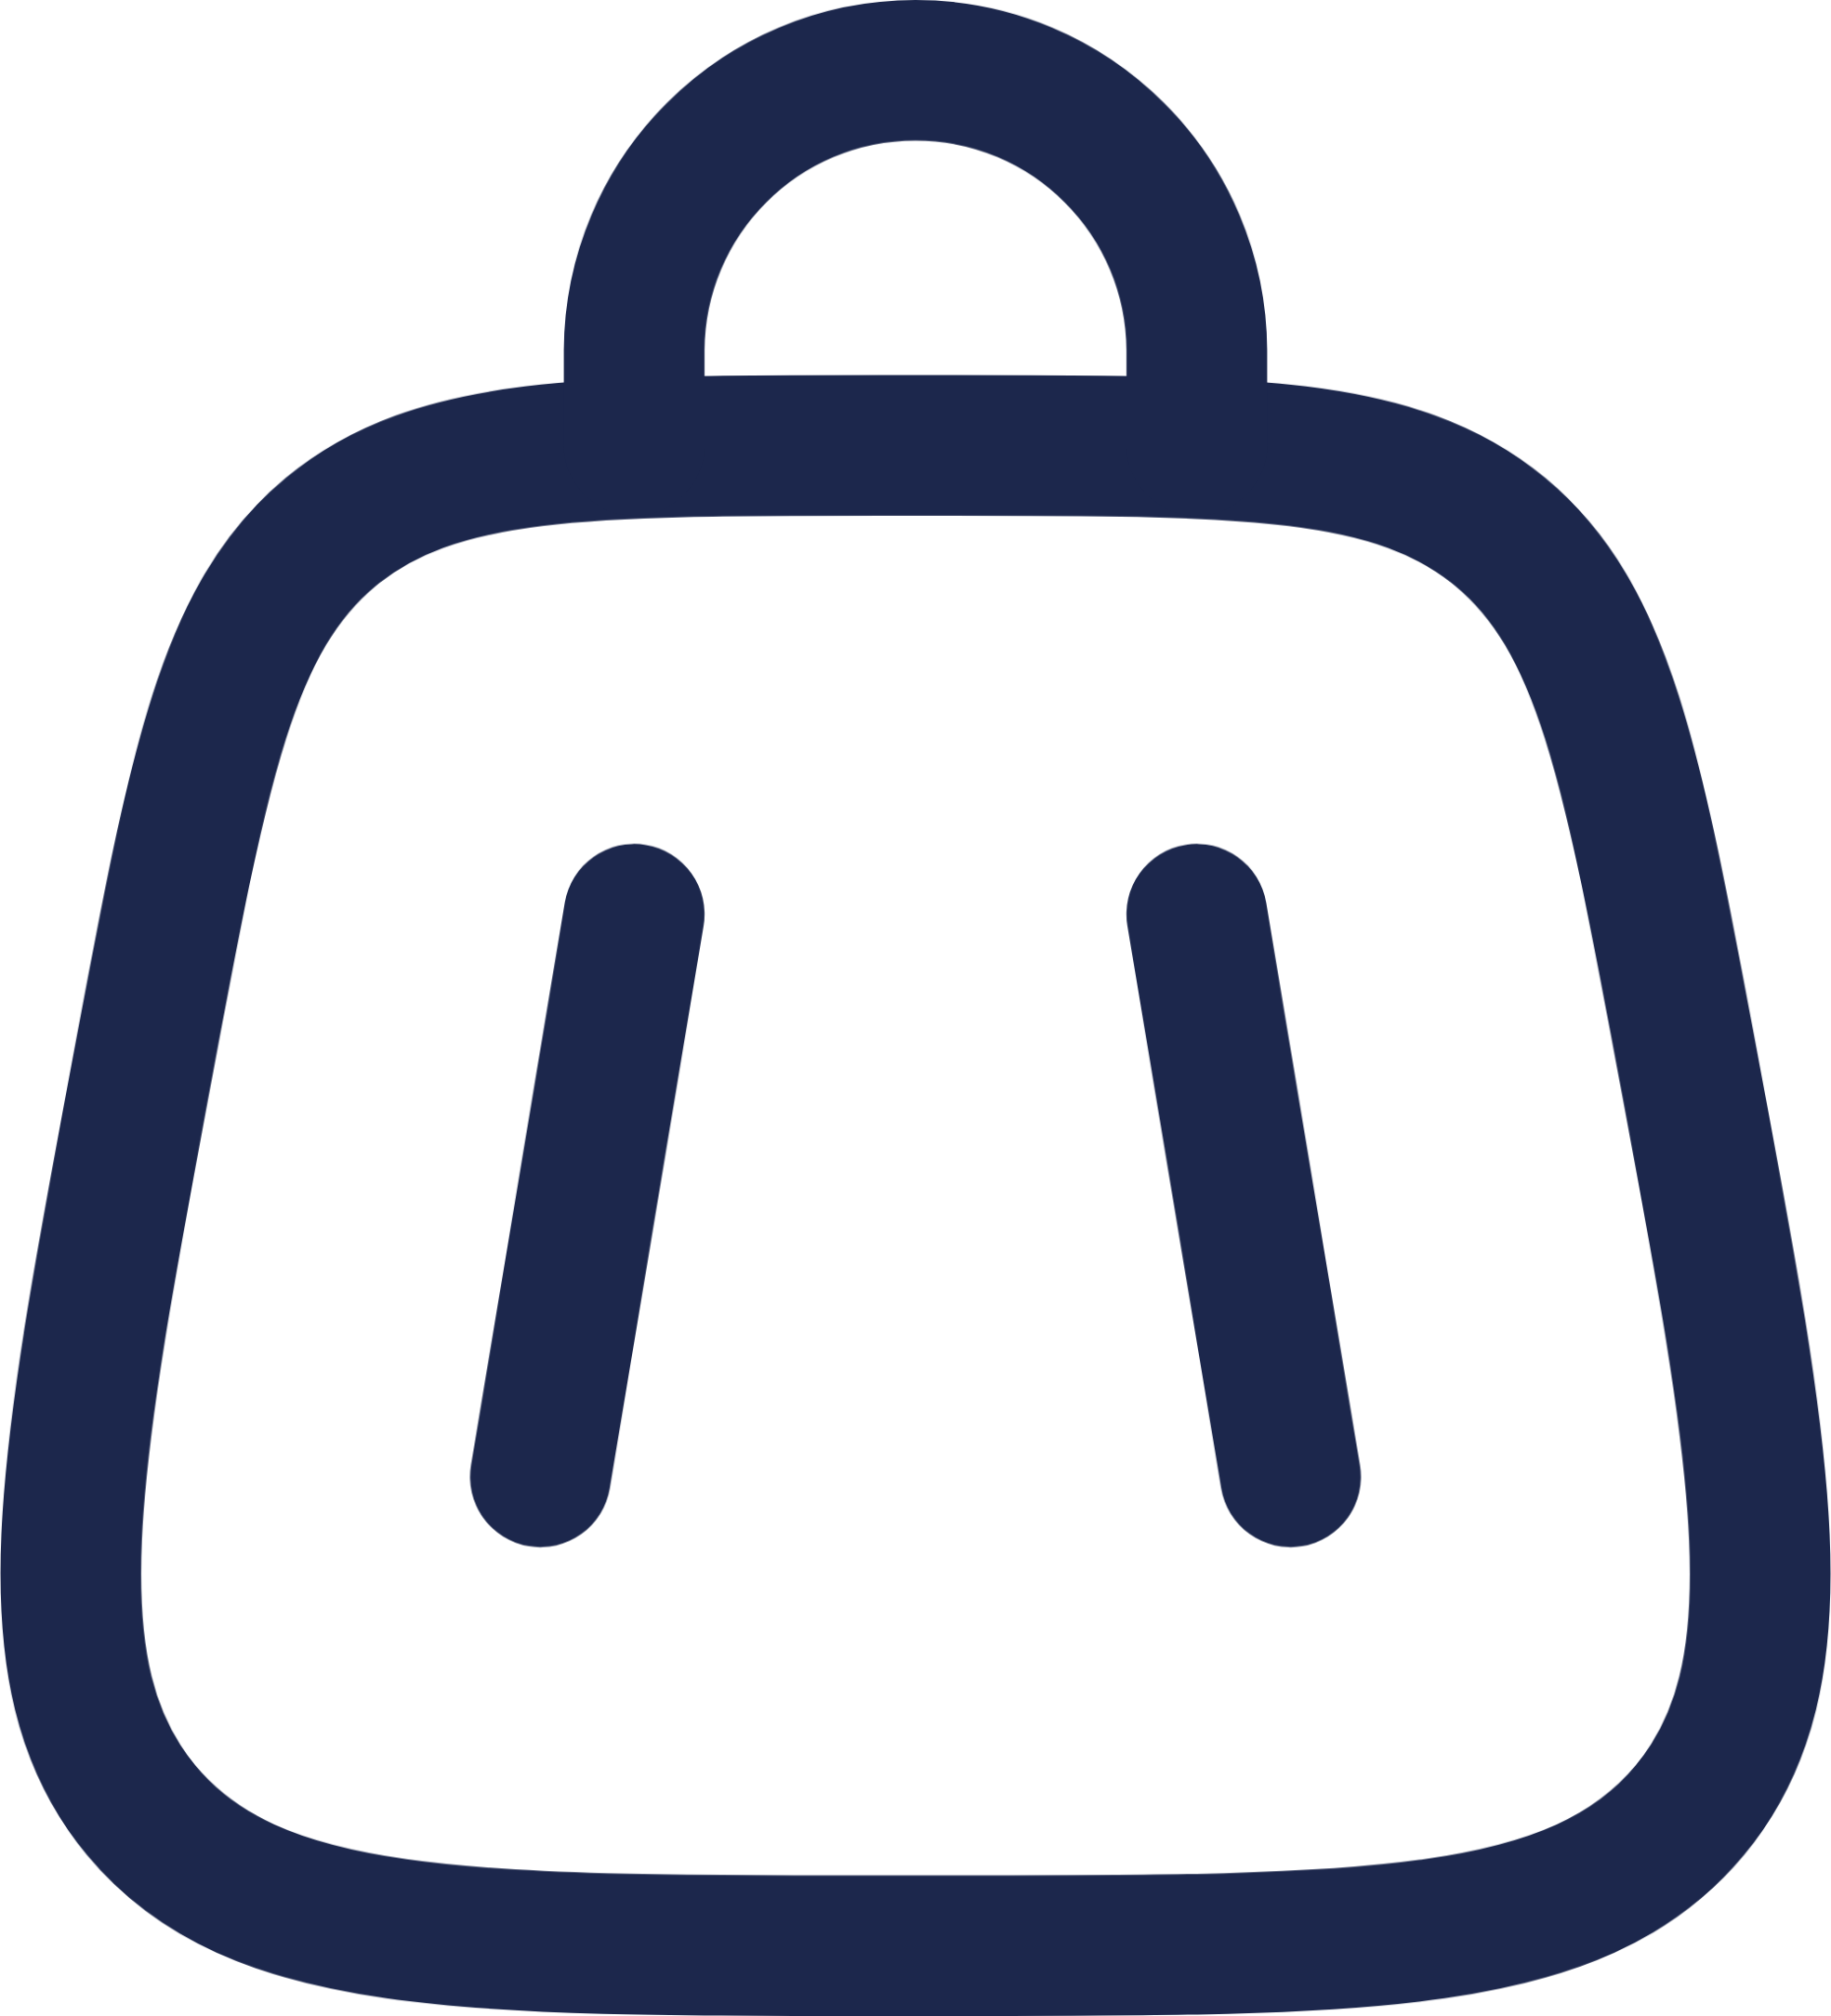 Bag 2 icon